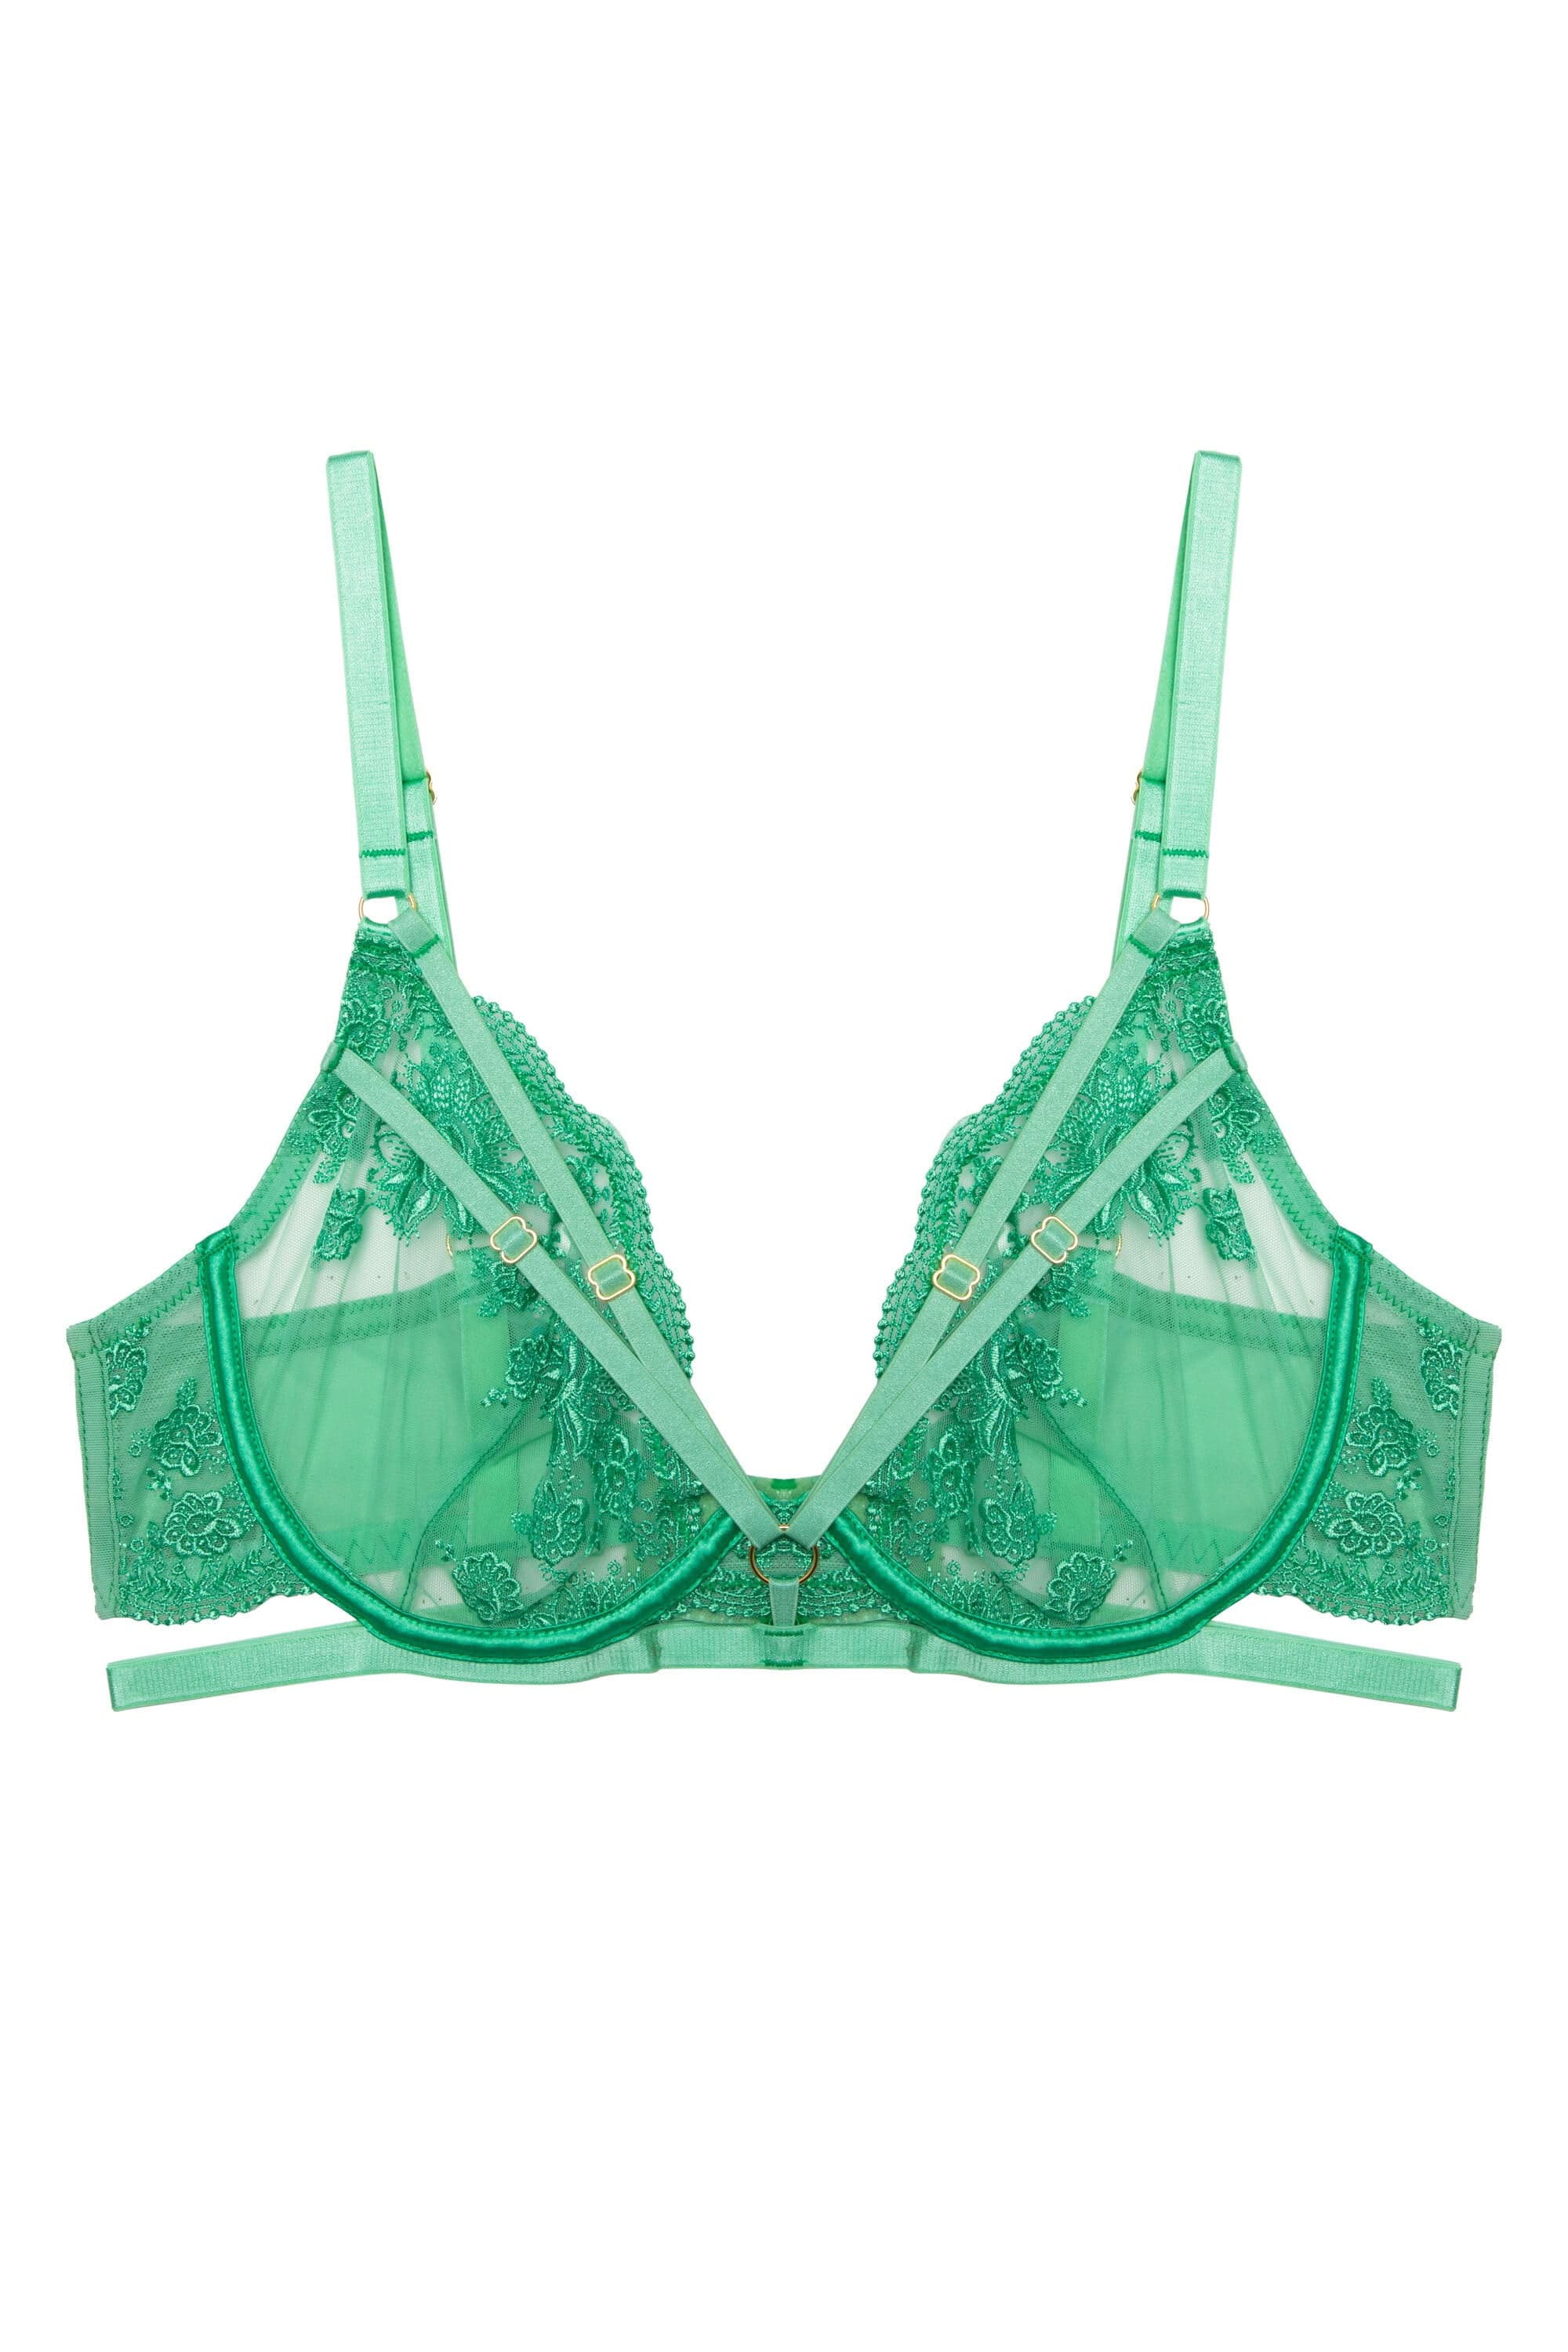 Sarina Green Embroidery Harness Set